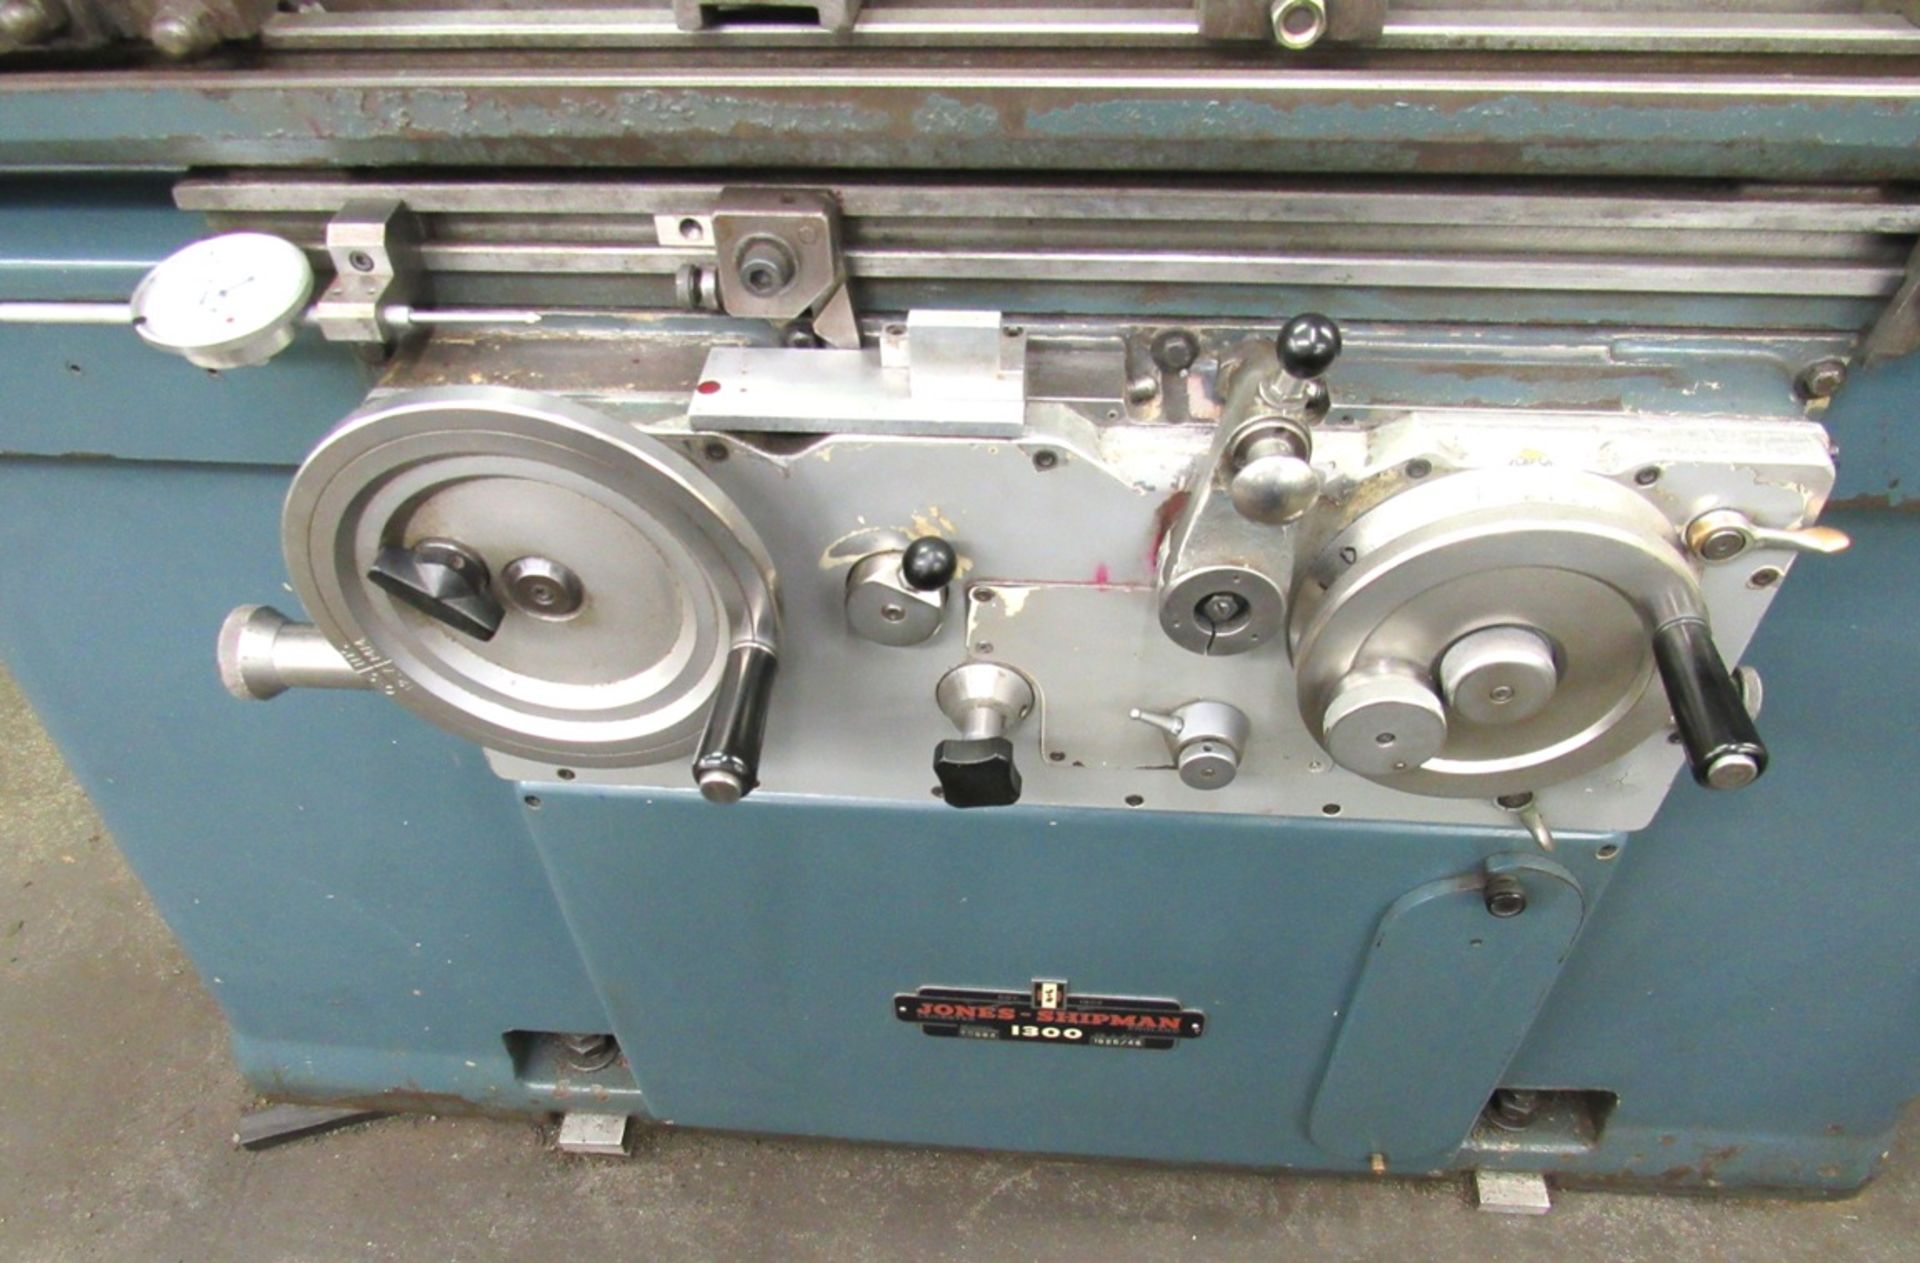 Jones & Shipman Model 1300EIU 10" x 27" Universal Hydraulic Cylindrical Grinder - S/N 70684, 12" x - Image 6 of 8